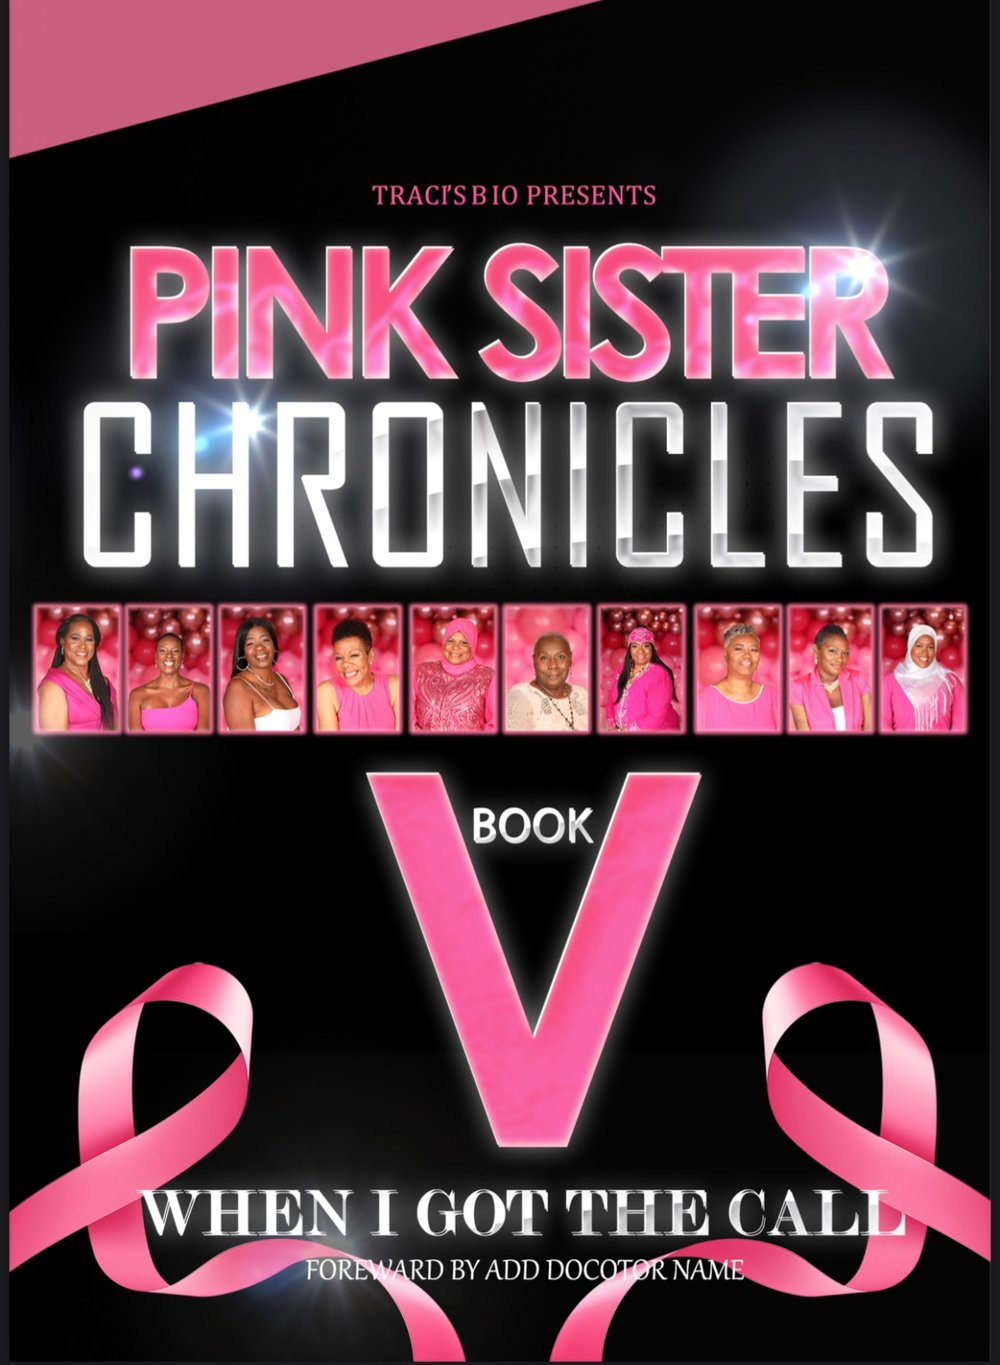 Traci’s BIO presents The Pink Sister Chronicles volume V “ When I Got The Call “